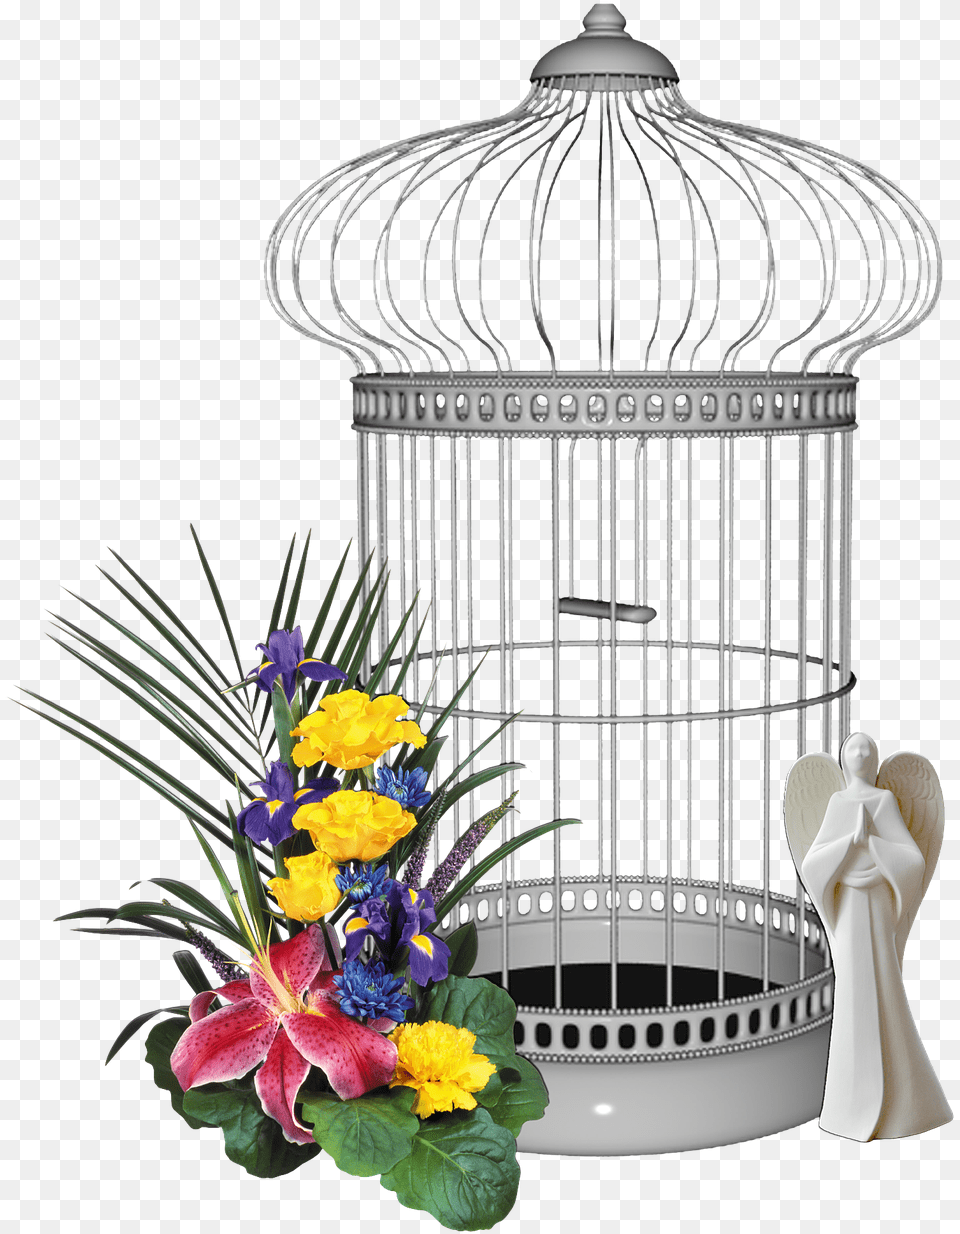 Bird Cage Yellow Flower Free On Pixabay Flower, Flower Arrangement, Flower Bouquet, Plant, Adult Png